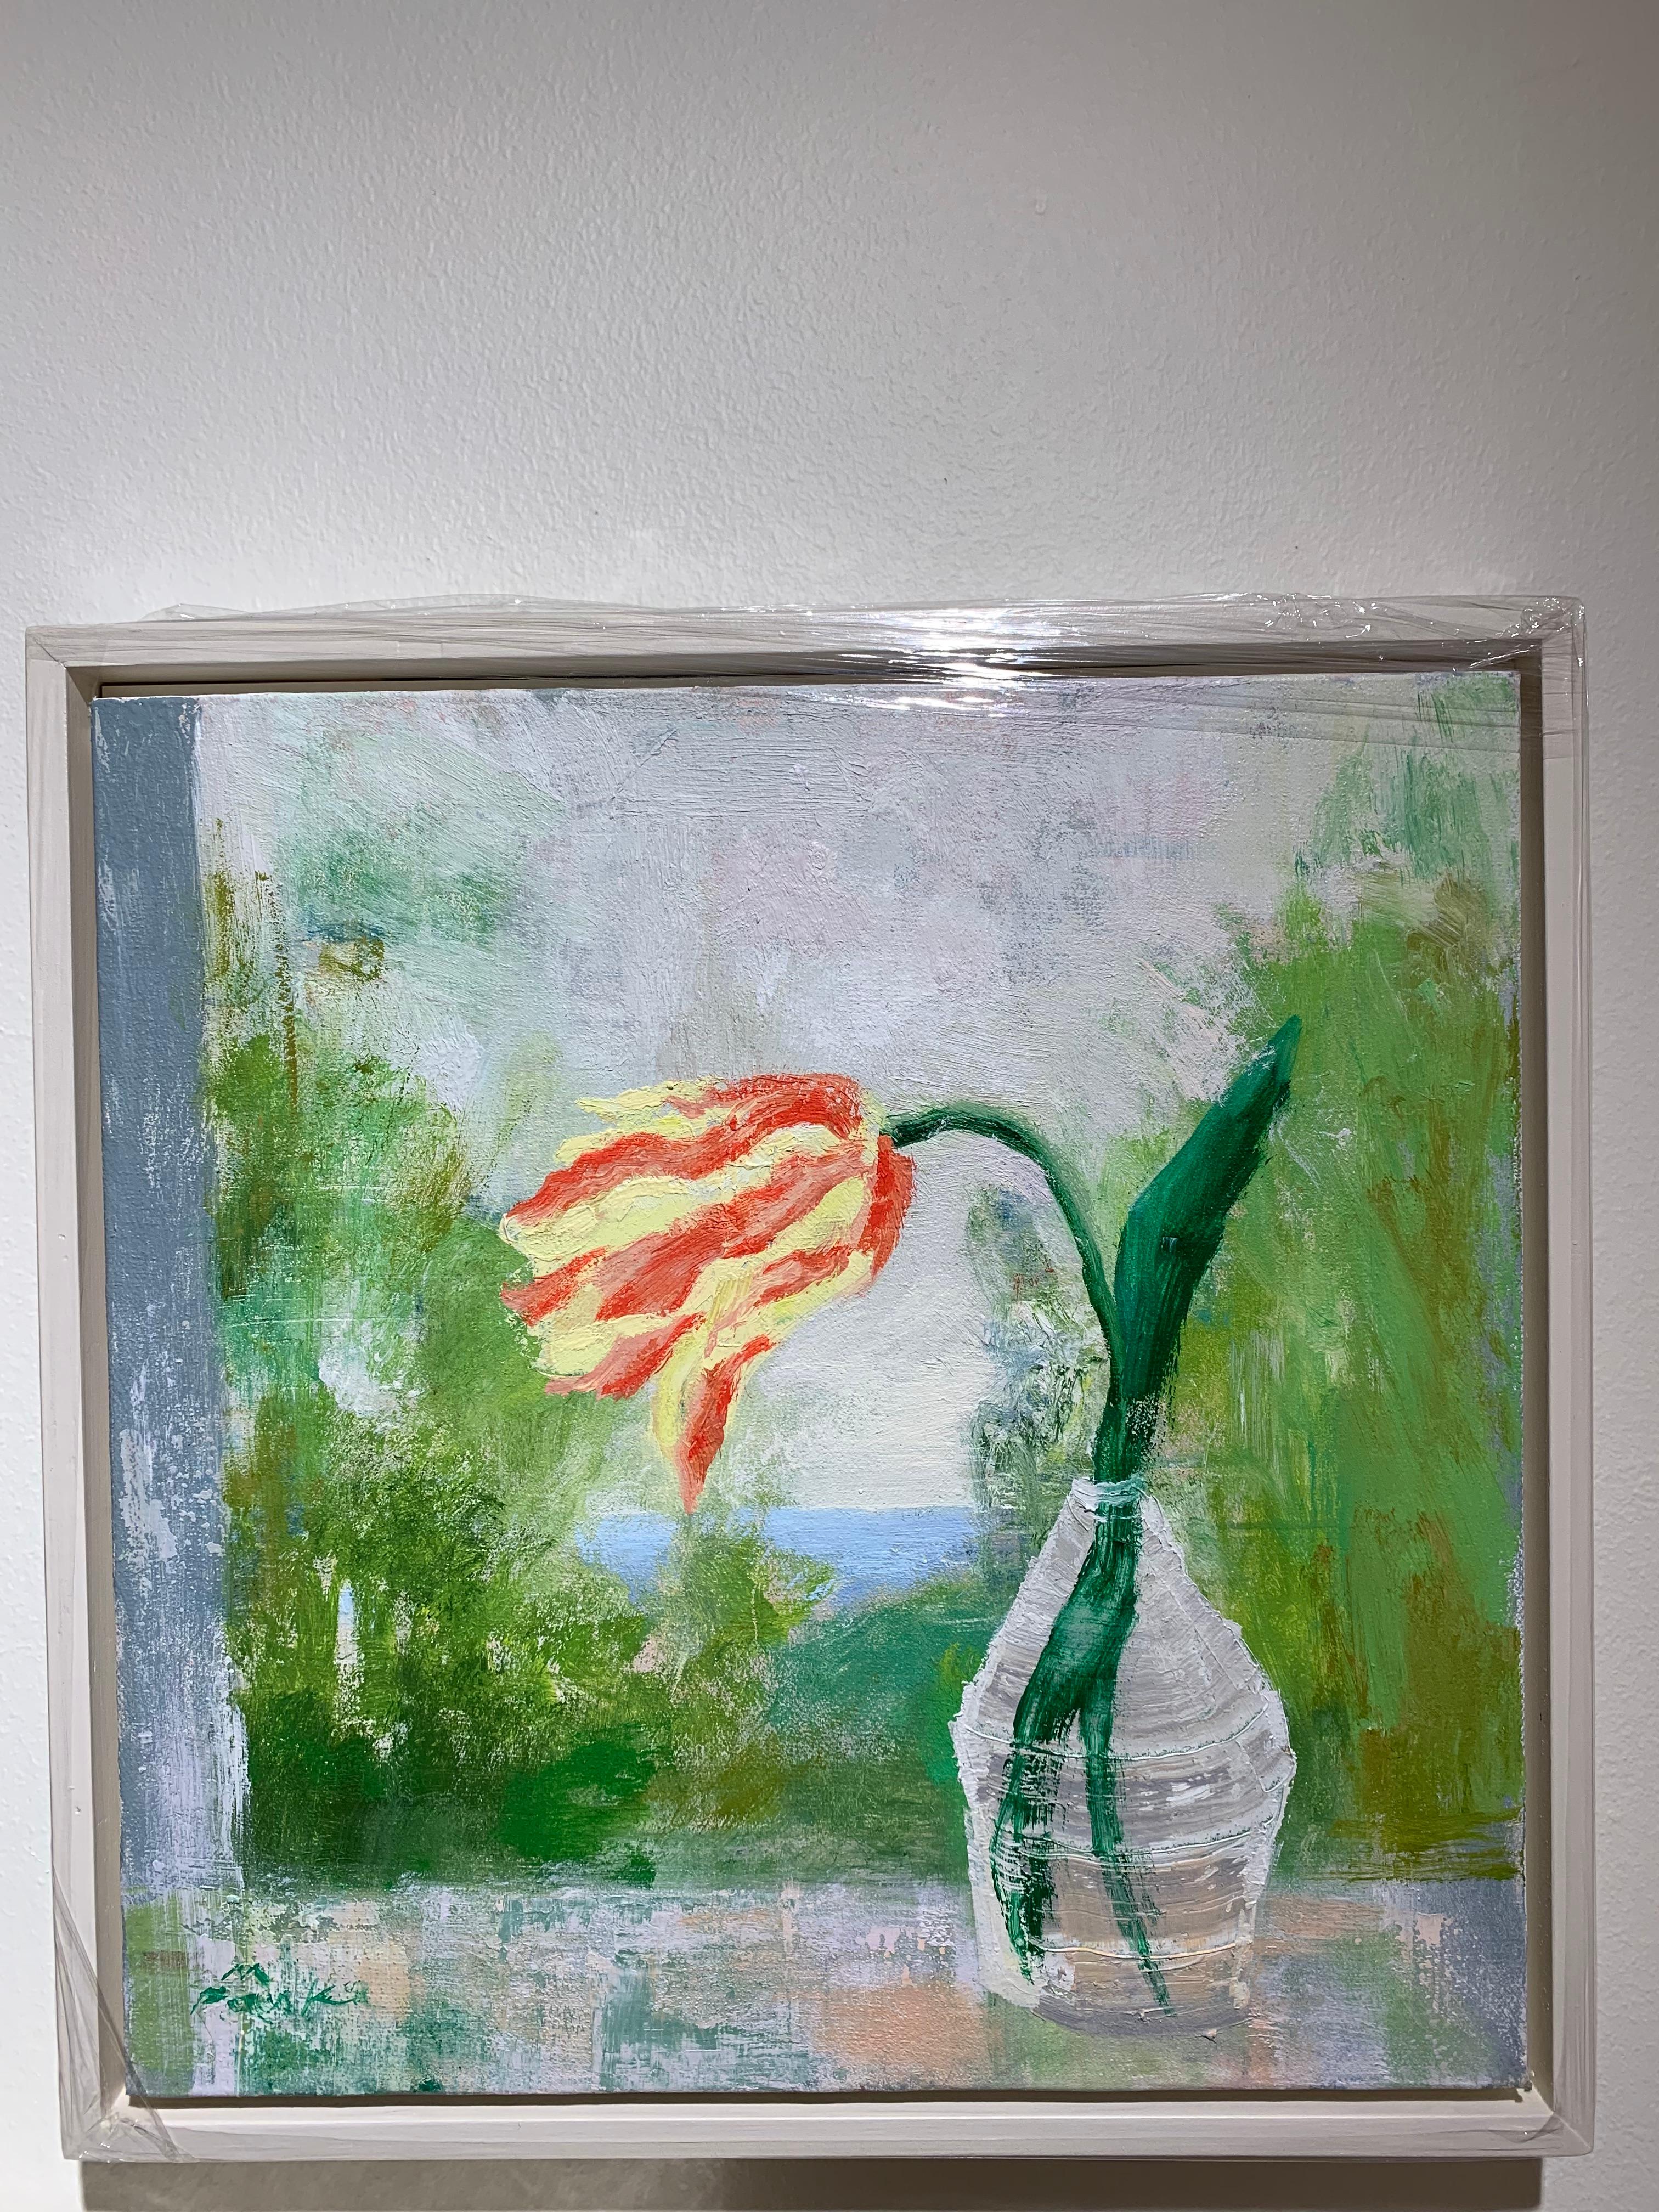 Melanie Parke, Sunday Tulip, impressionist oil on canvas floral still life, 2019 1